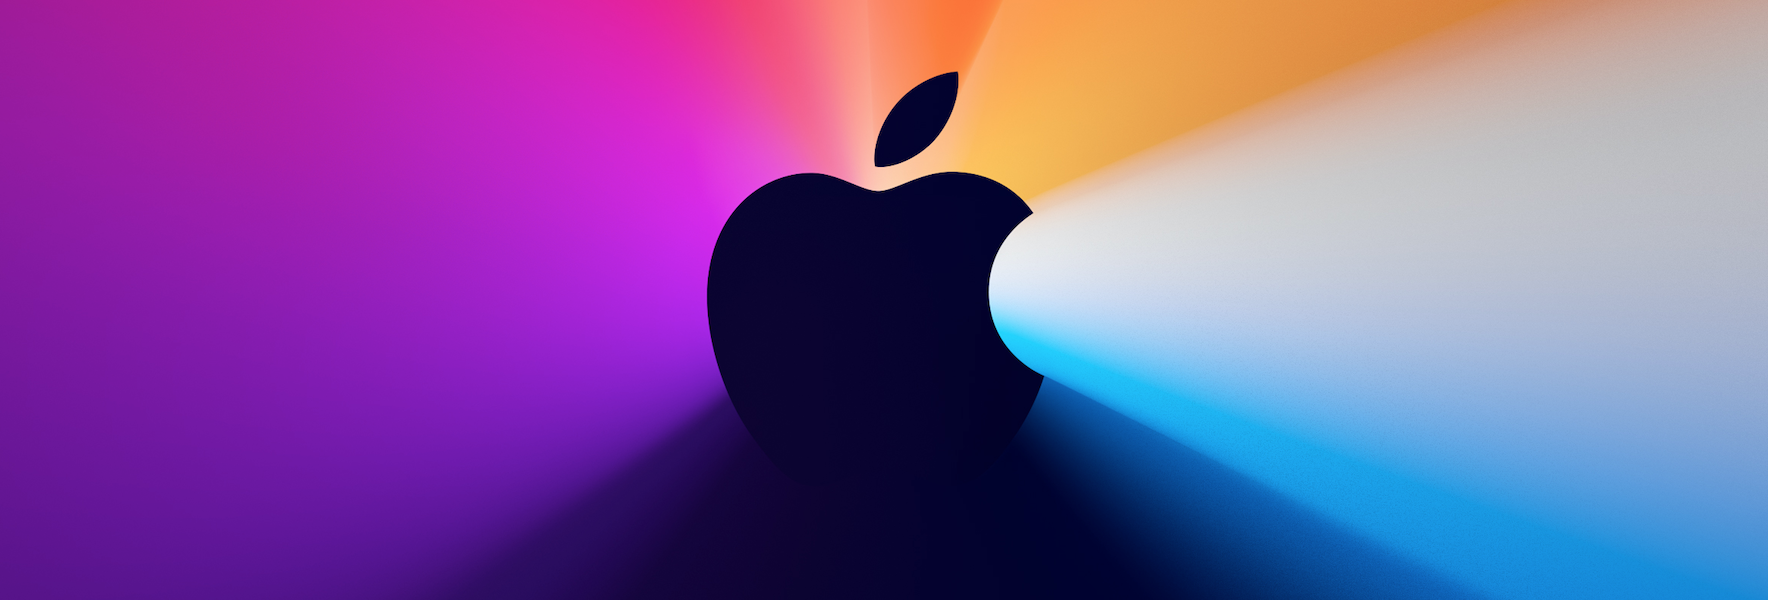 Apple’s November 2020 Event: The Future of Mac